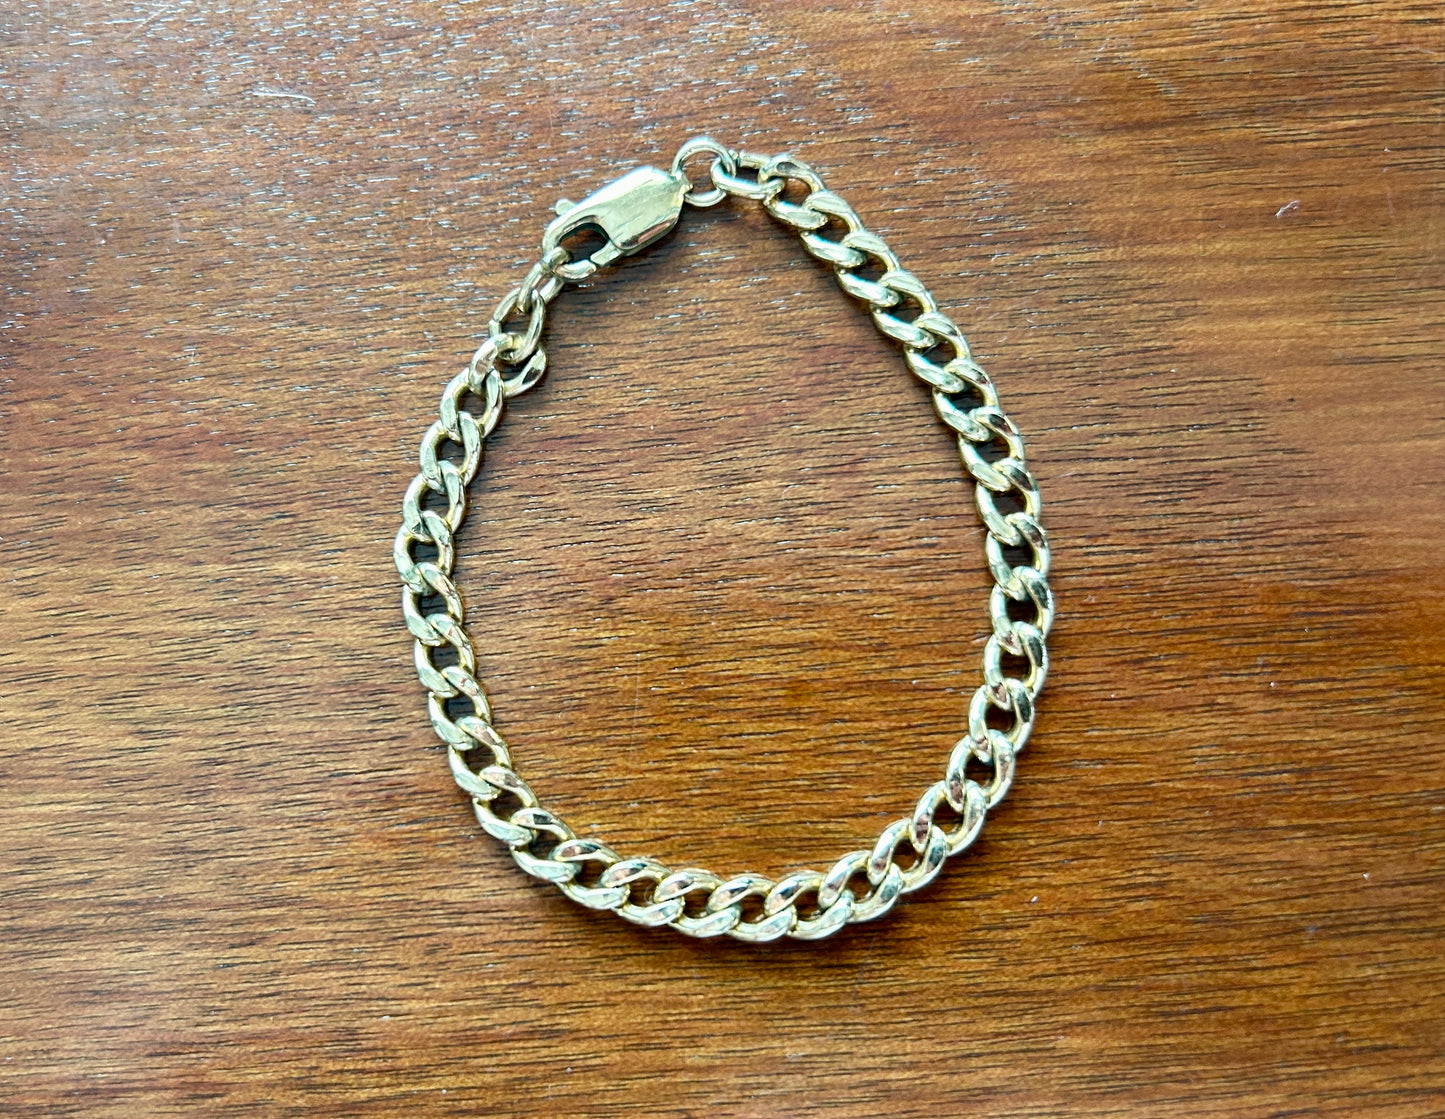 Vintage 1/20 12k Yellow Gold Filled Curb Chain Link Bracelet 6.5" Long